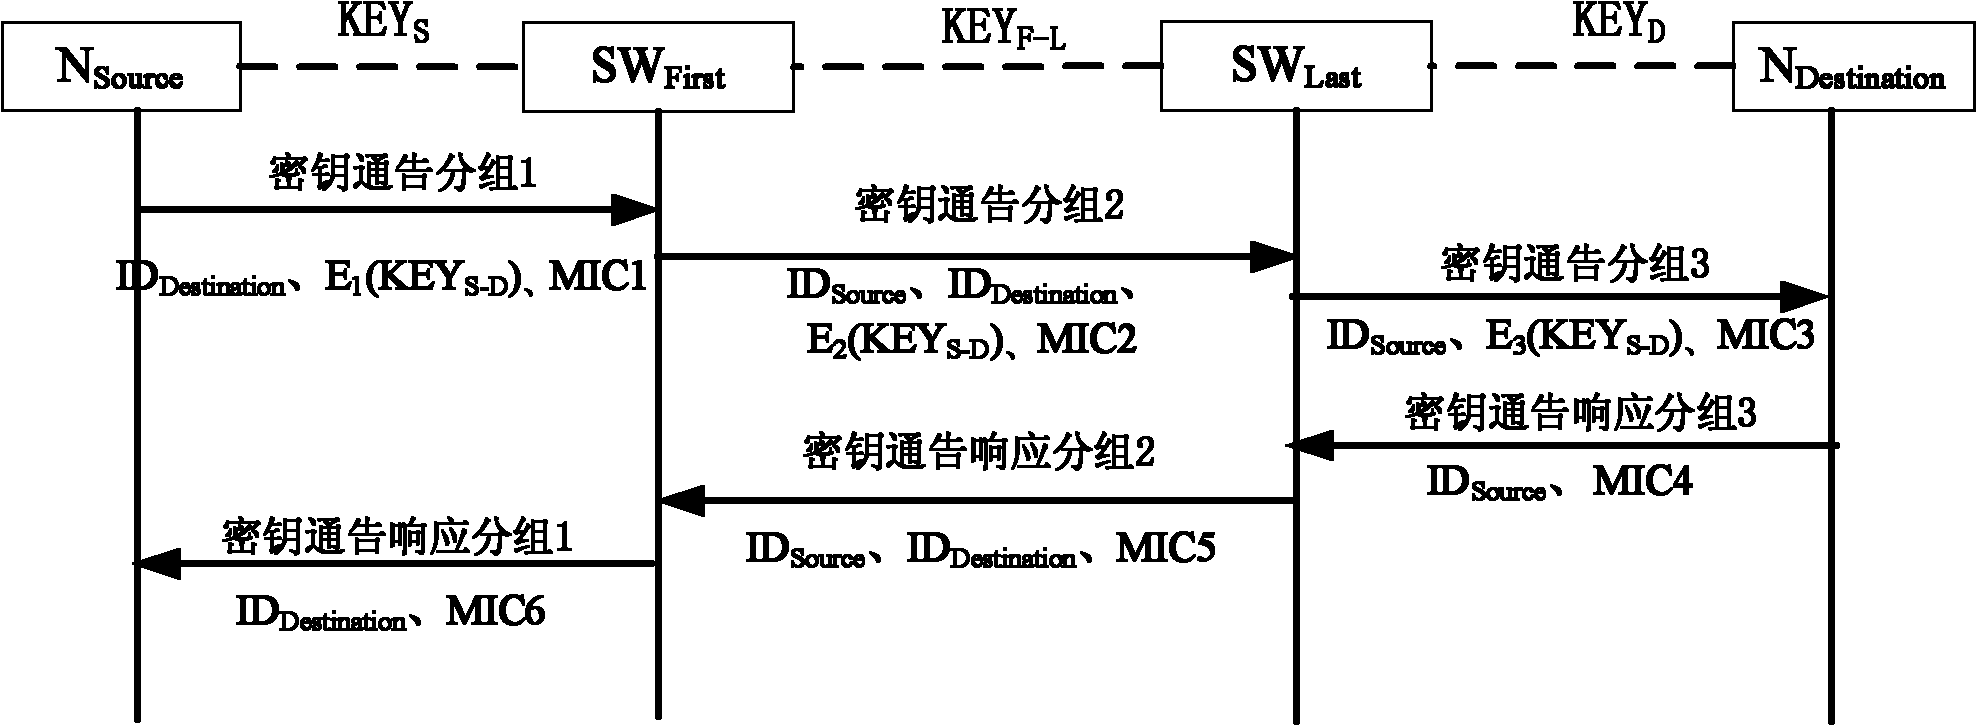 Method and system for establishing communication key between nodes